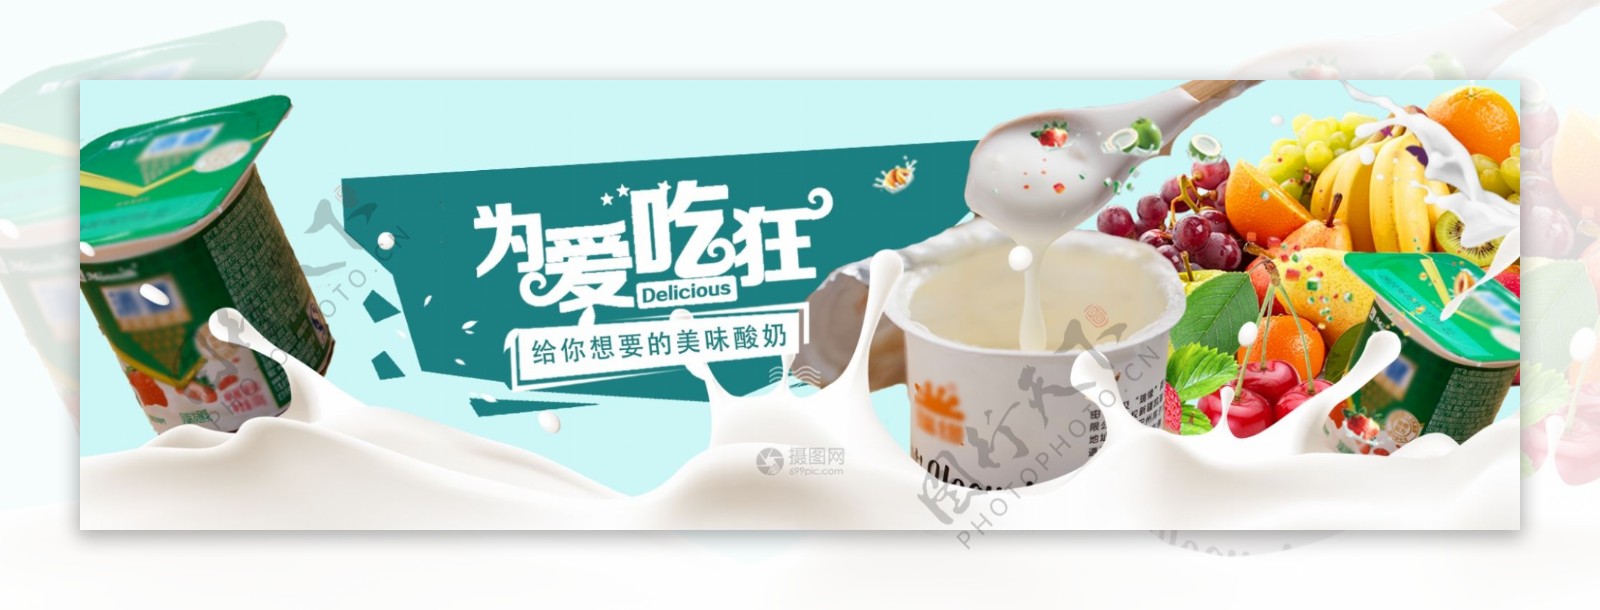 为爱吃狂酸奶banner